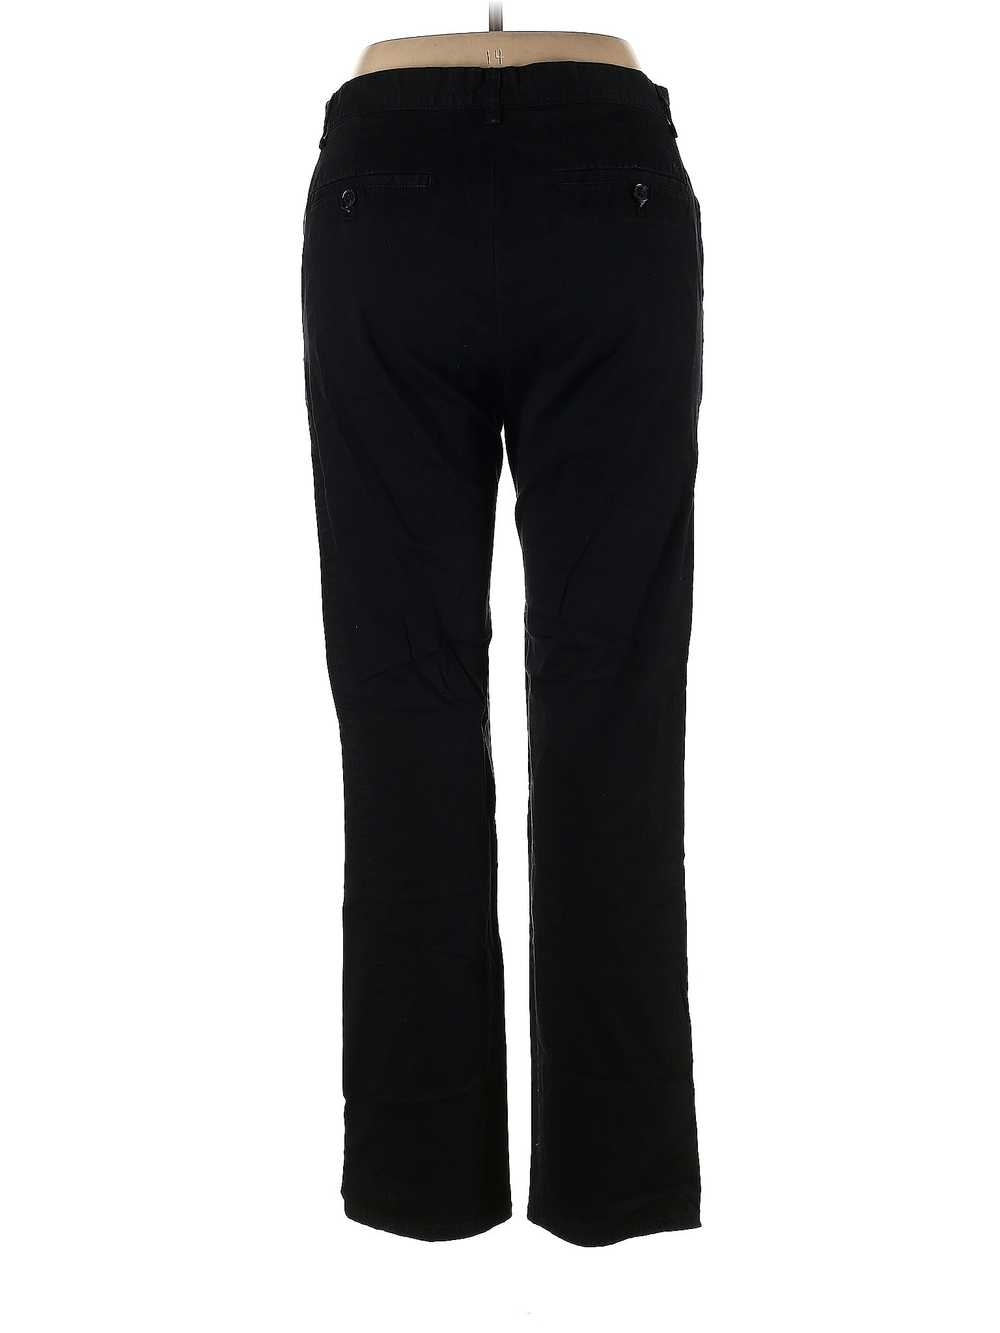 Calvin Klein Women Black Casual Pants 32W - image 2